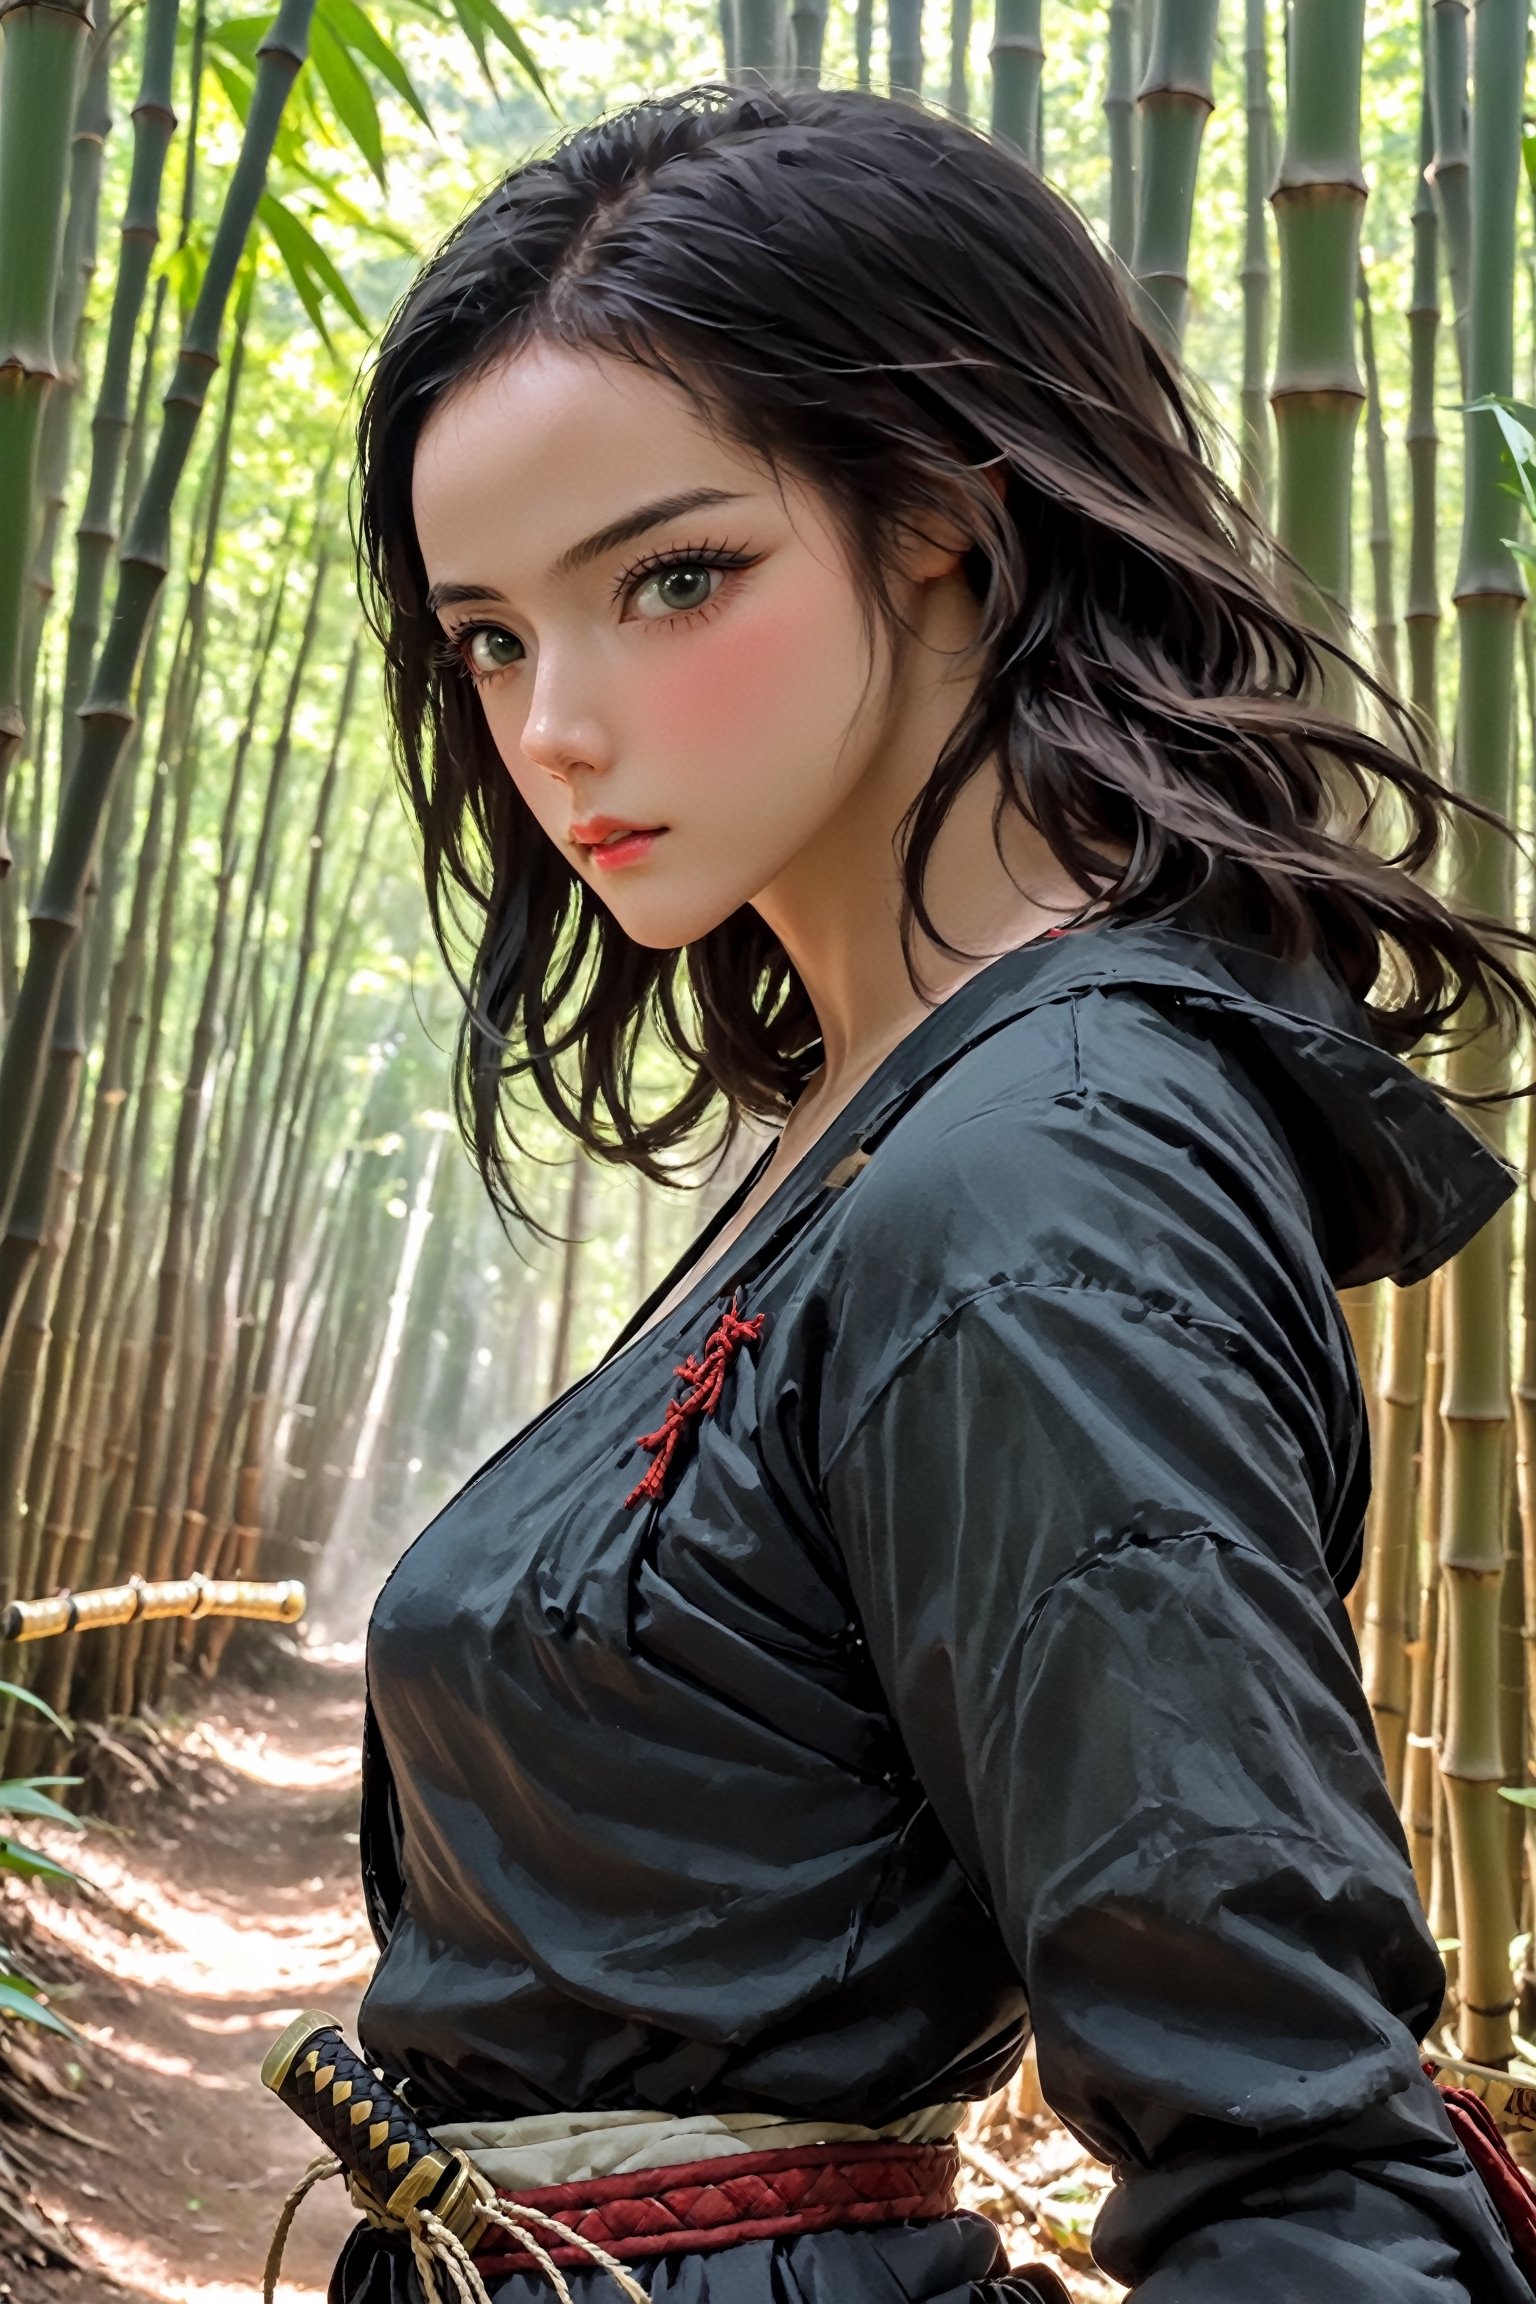  sexy woman   [ medieval samurai]  in a  [bambu forest],   , katana, , designed by mike mingola,aw0k nsfwfactory,aw0k magnstyle,danknis,sooyaaa,Anime ,dlwlrma,,beyond_the_black_rainbow,roborobocap,anime